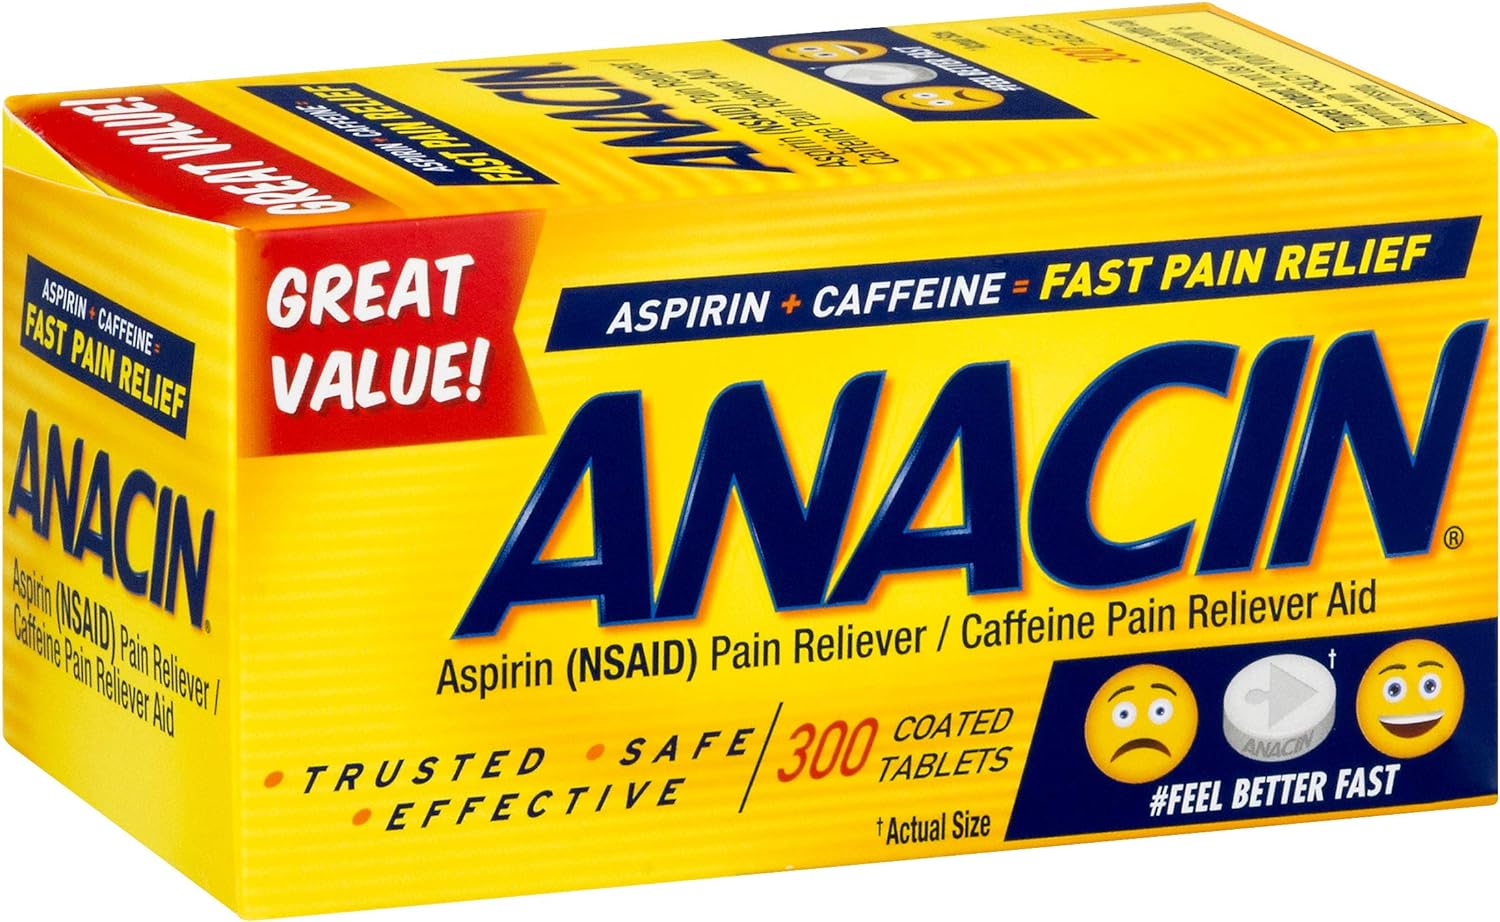 Anacin Aspirin/Caffeine Pain Reliever Aid | Fast Pain Relief | 300 Tab